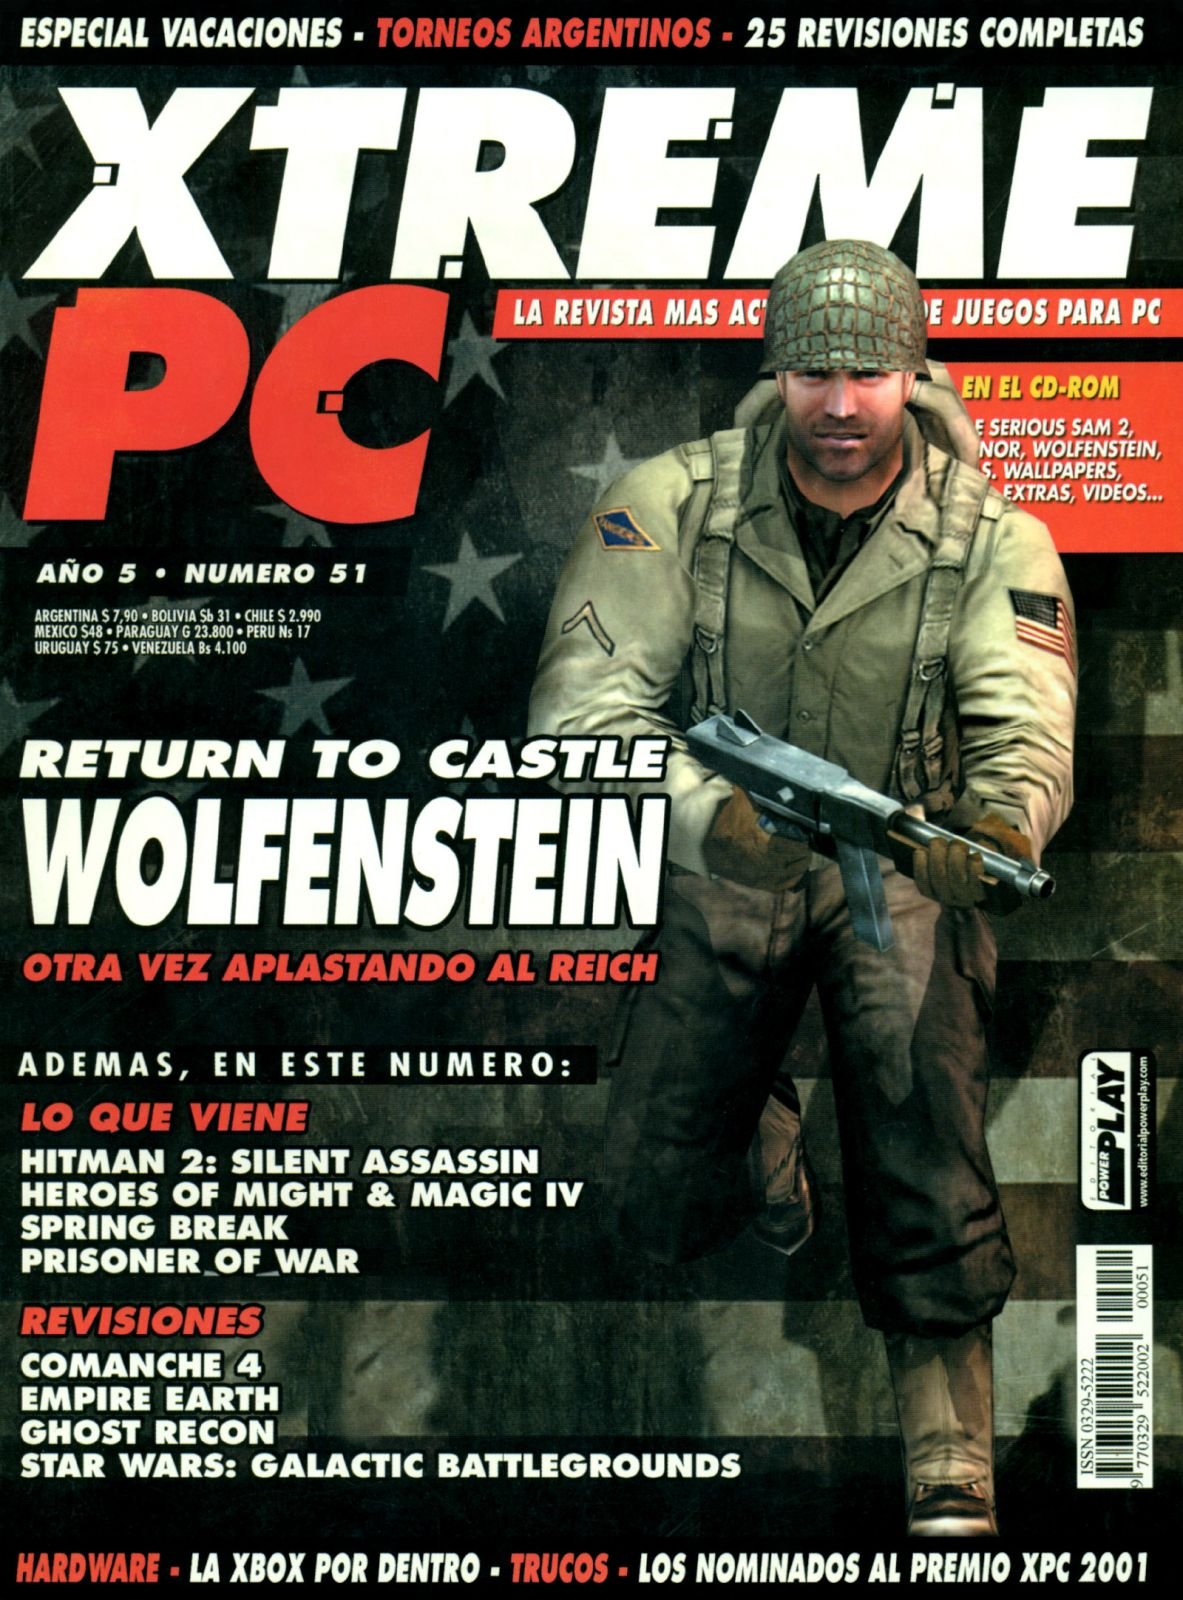 Xtreme PC 51 January 2002